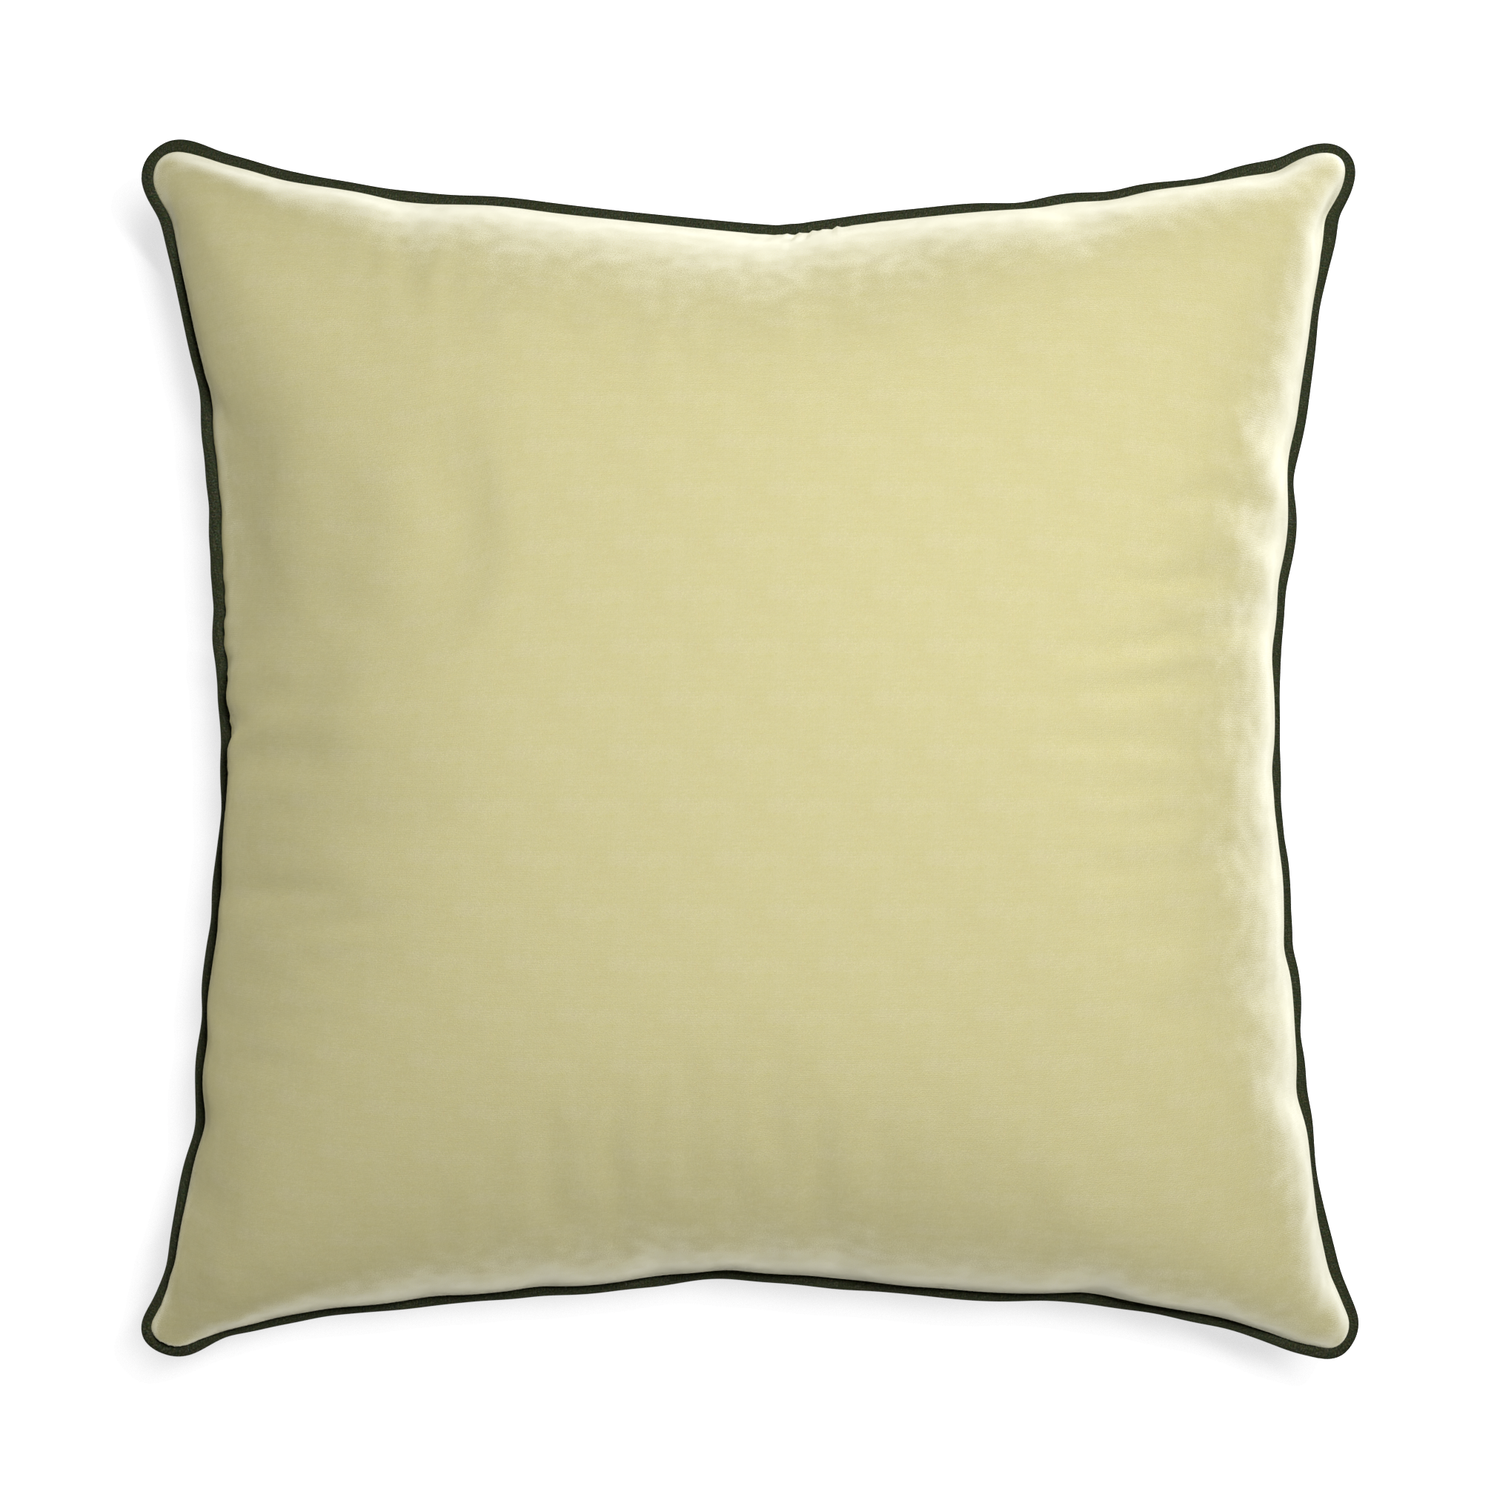 Euro-sham pear velvet custom pillow with f piping on white background